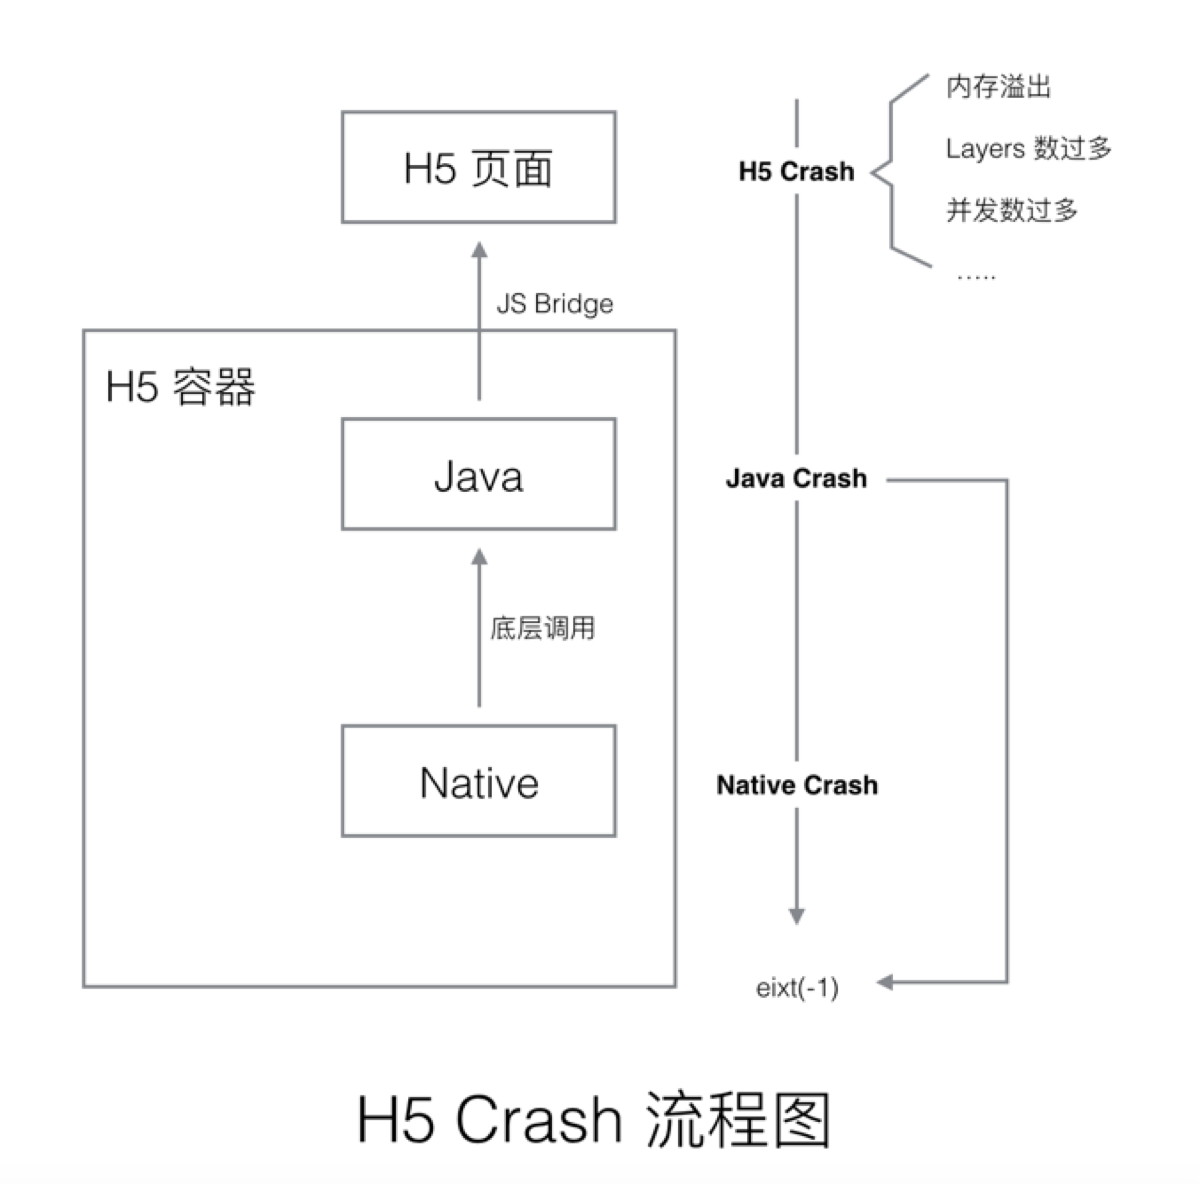 H5 Crash 流程图